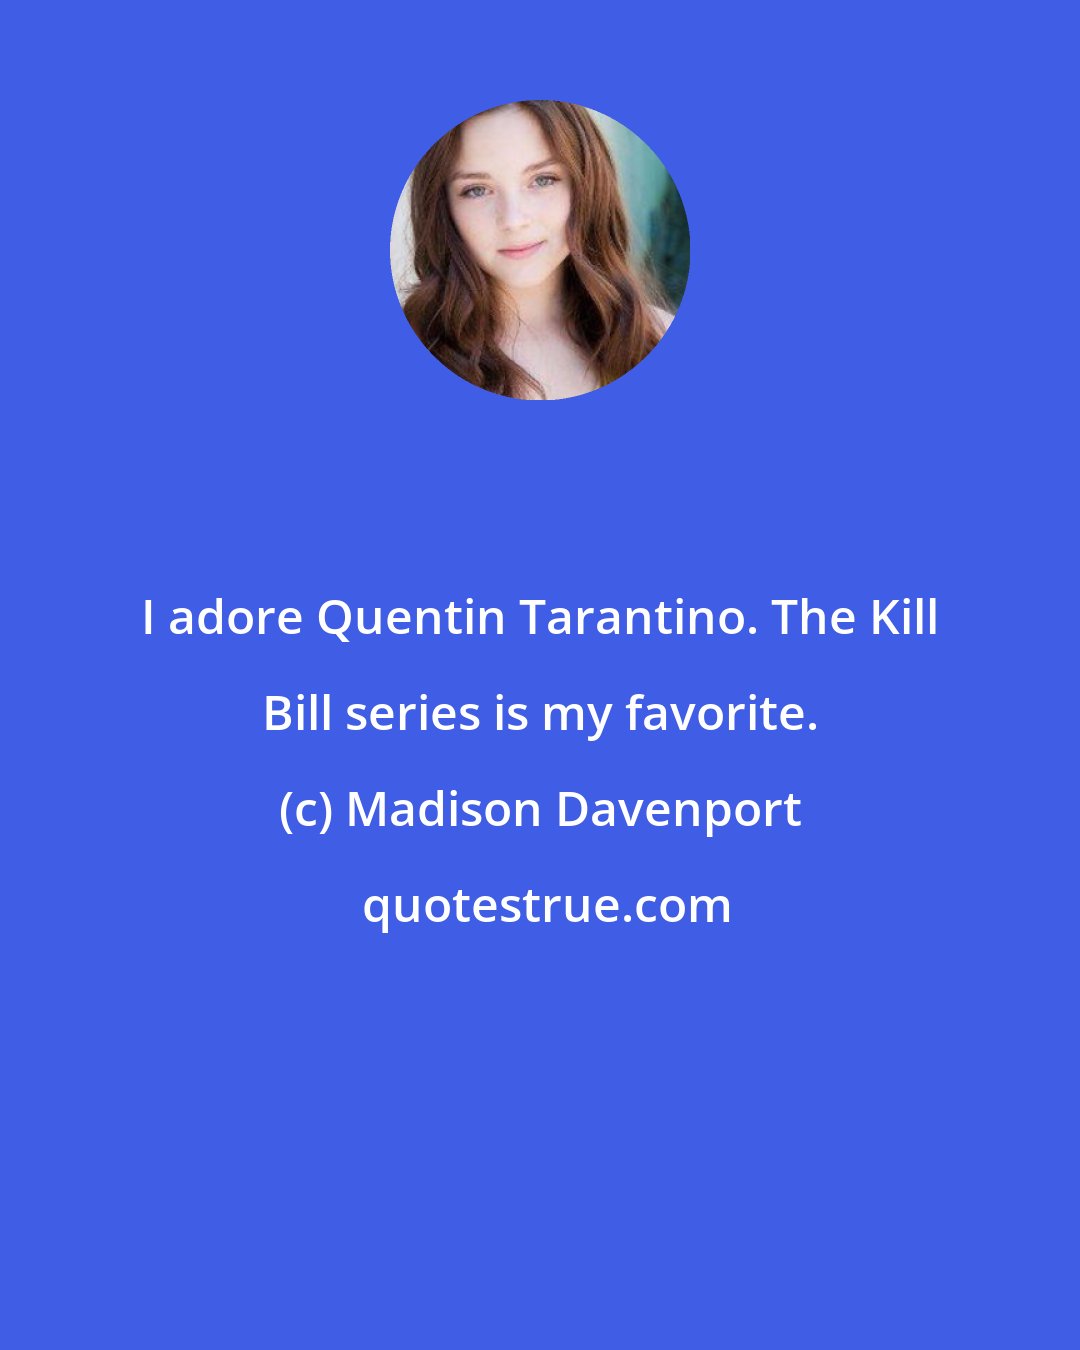 Madison Davenport: I adore Quentin Tarantino. The Kill Bill series is my favorite.